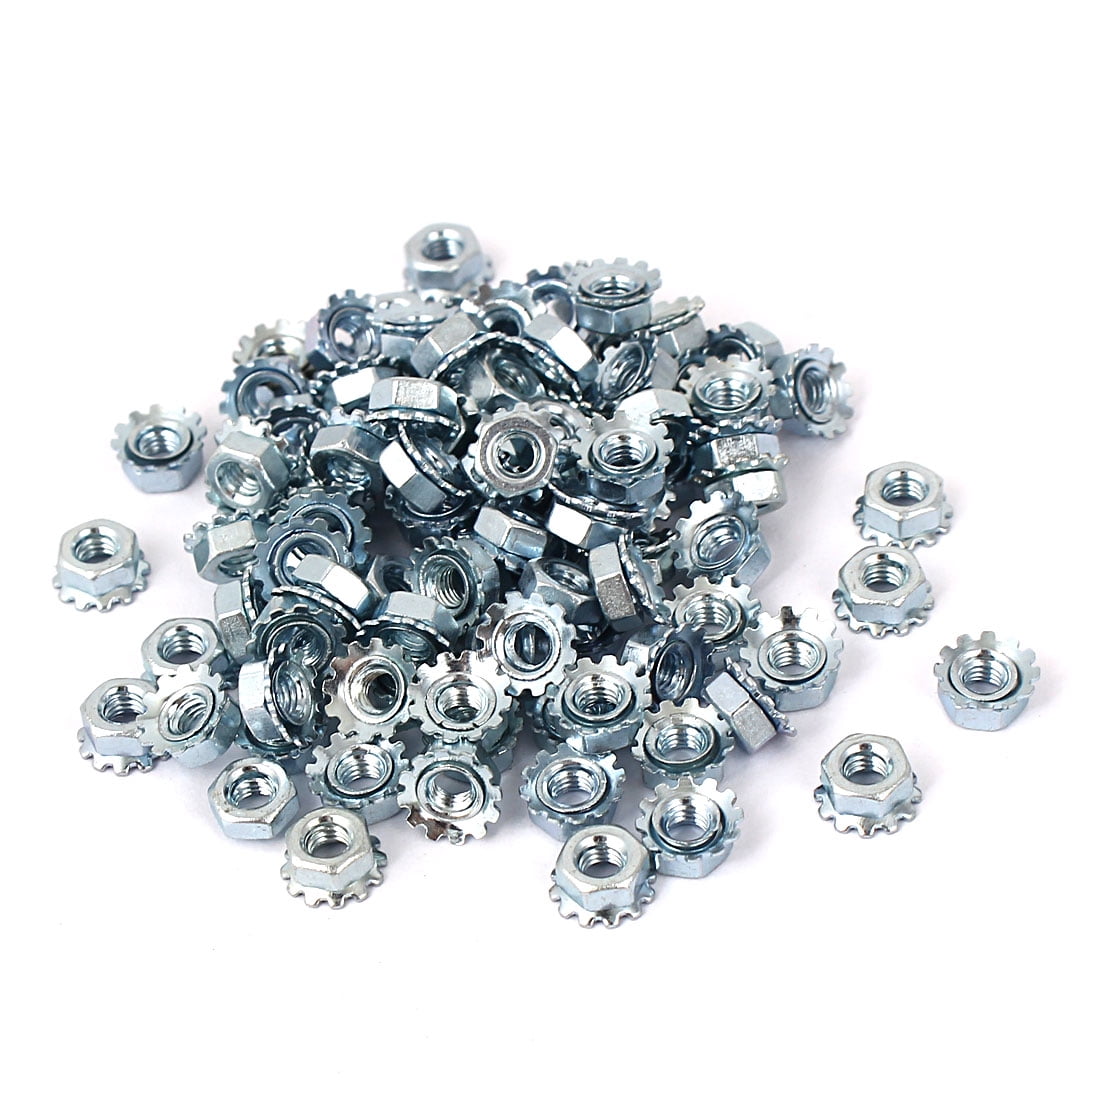 100PCS Screw Assortment Kit Fine Thread Stainless Steel White Hex Lock Nuts